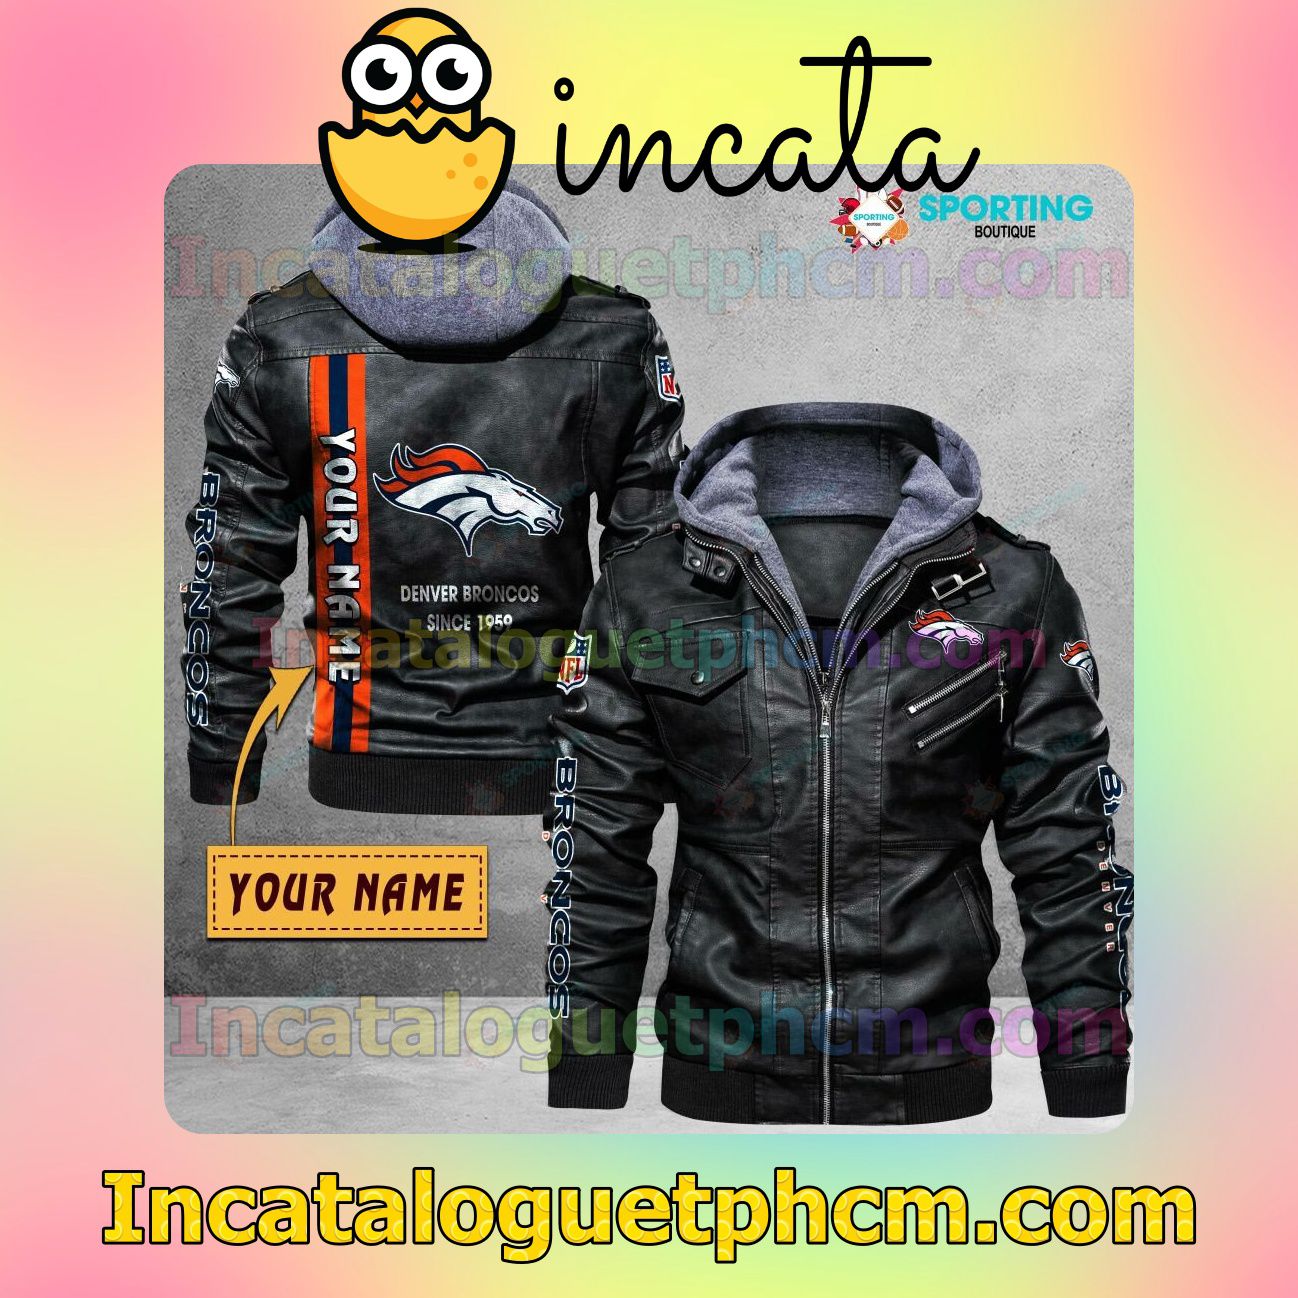 Denver Broncos Customize Brand Uniform Leather Jacket